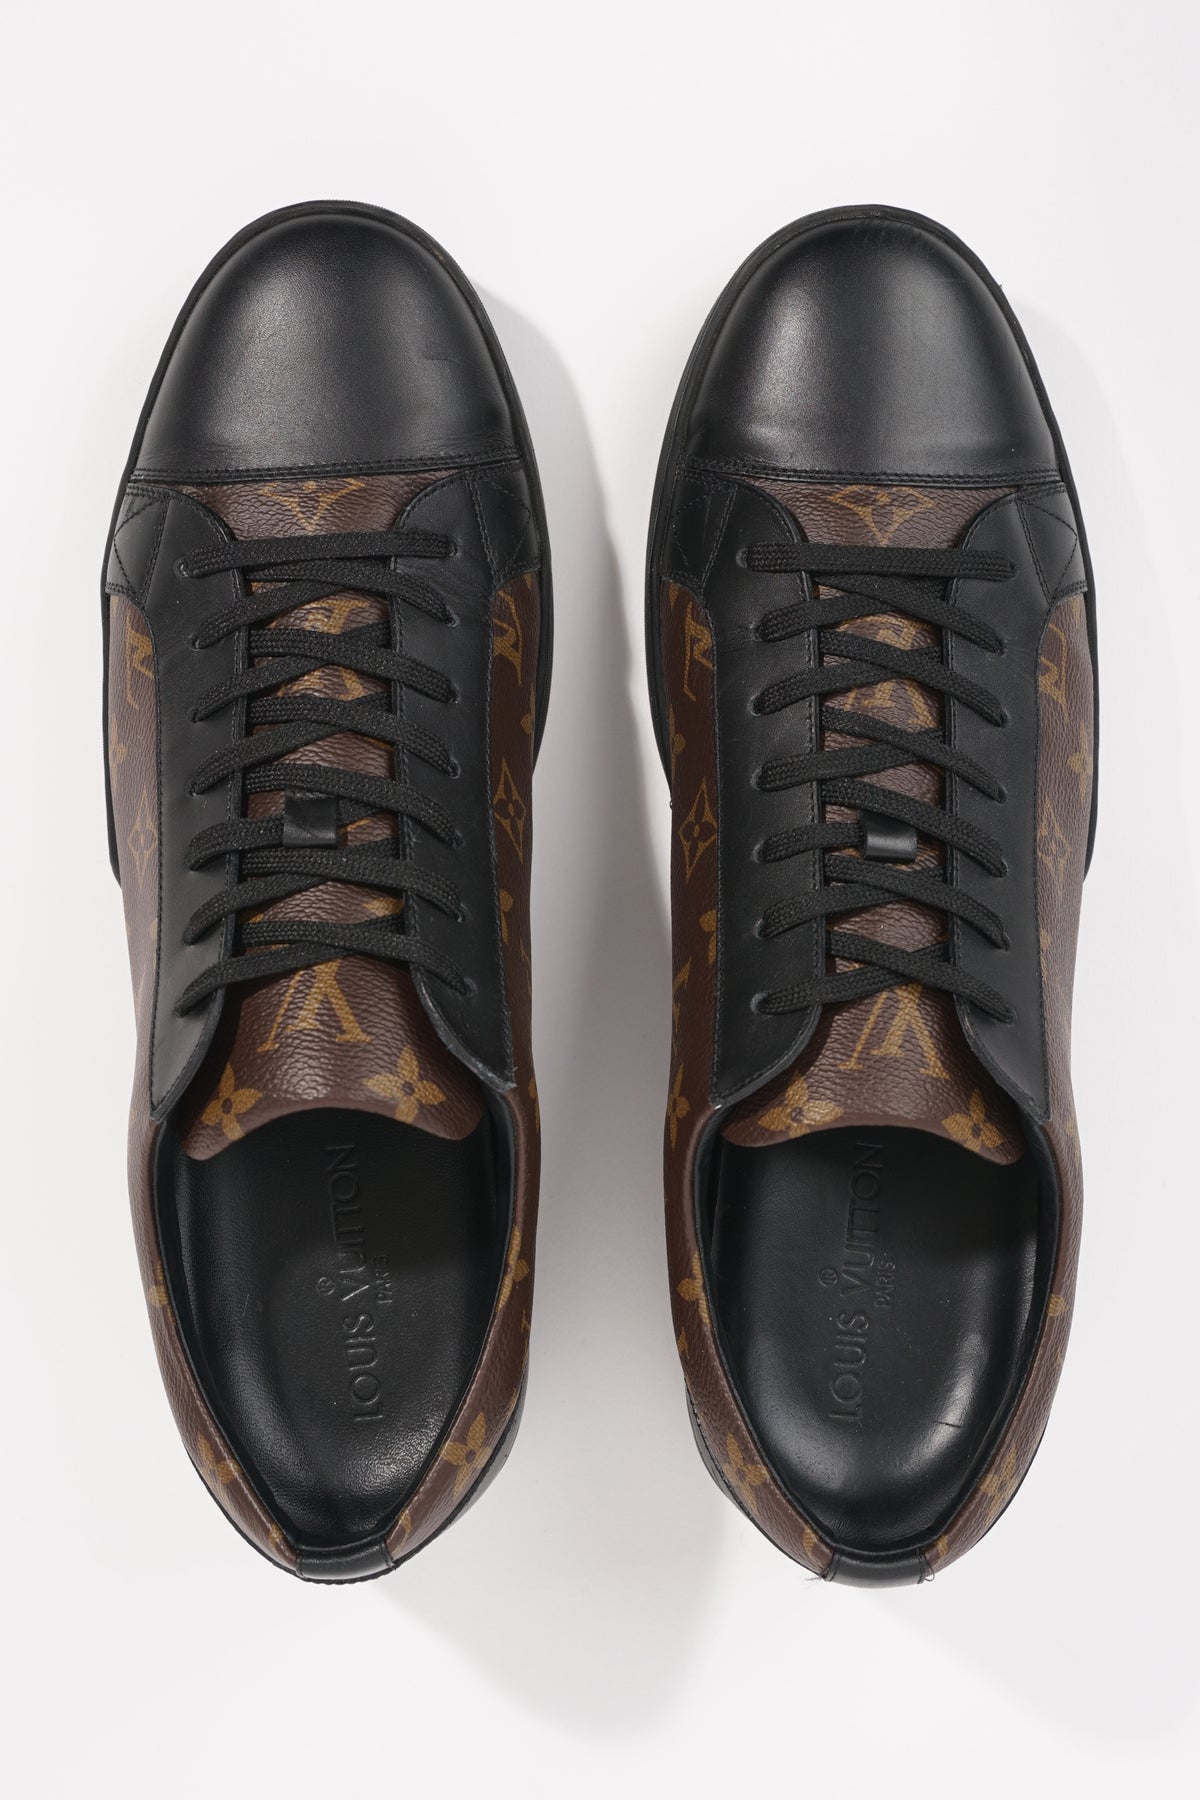 Louis Vuitton Men's US 5.5 Black Monogram Eclipse Match-Up High Top Sneaker 817lv43, Size: 4.5